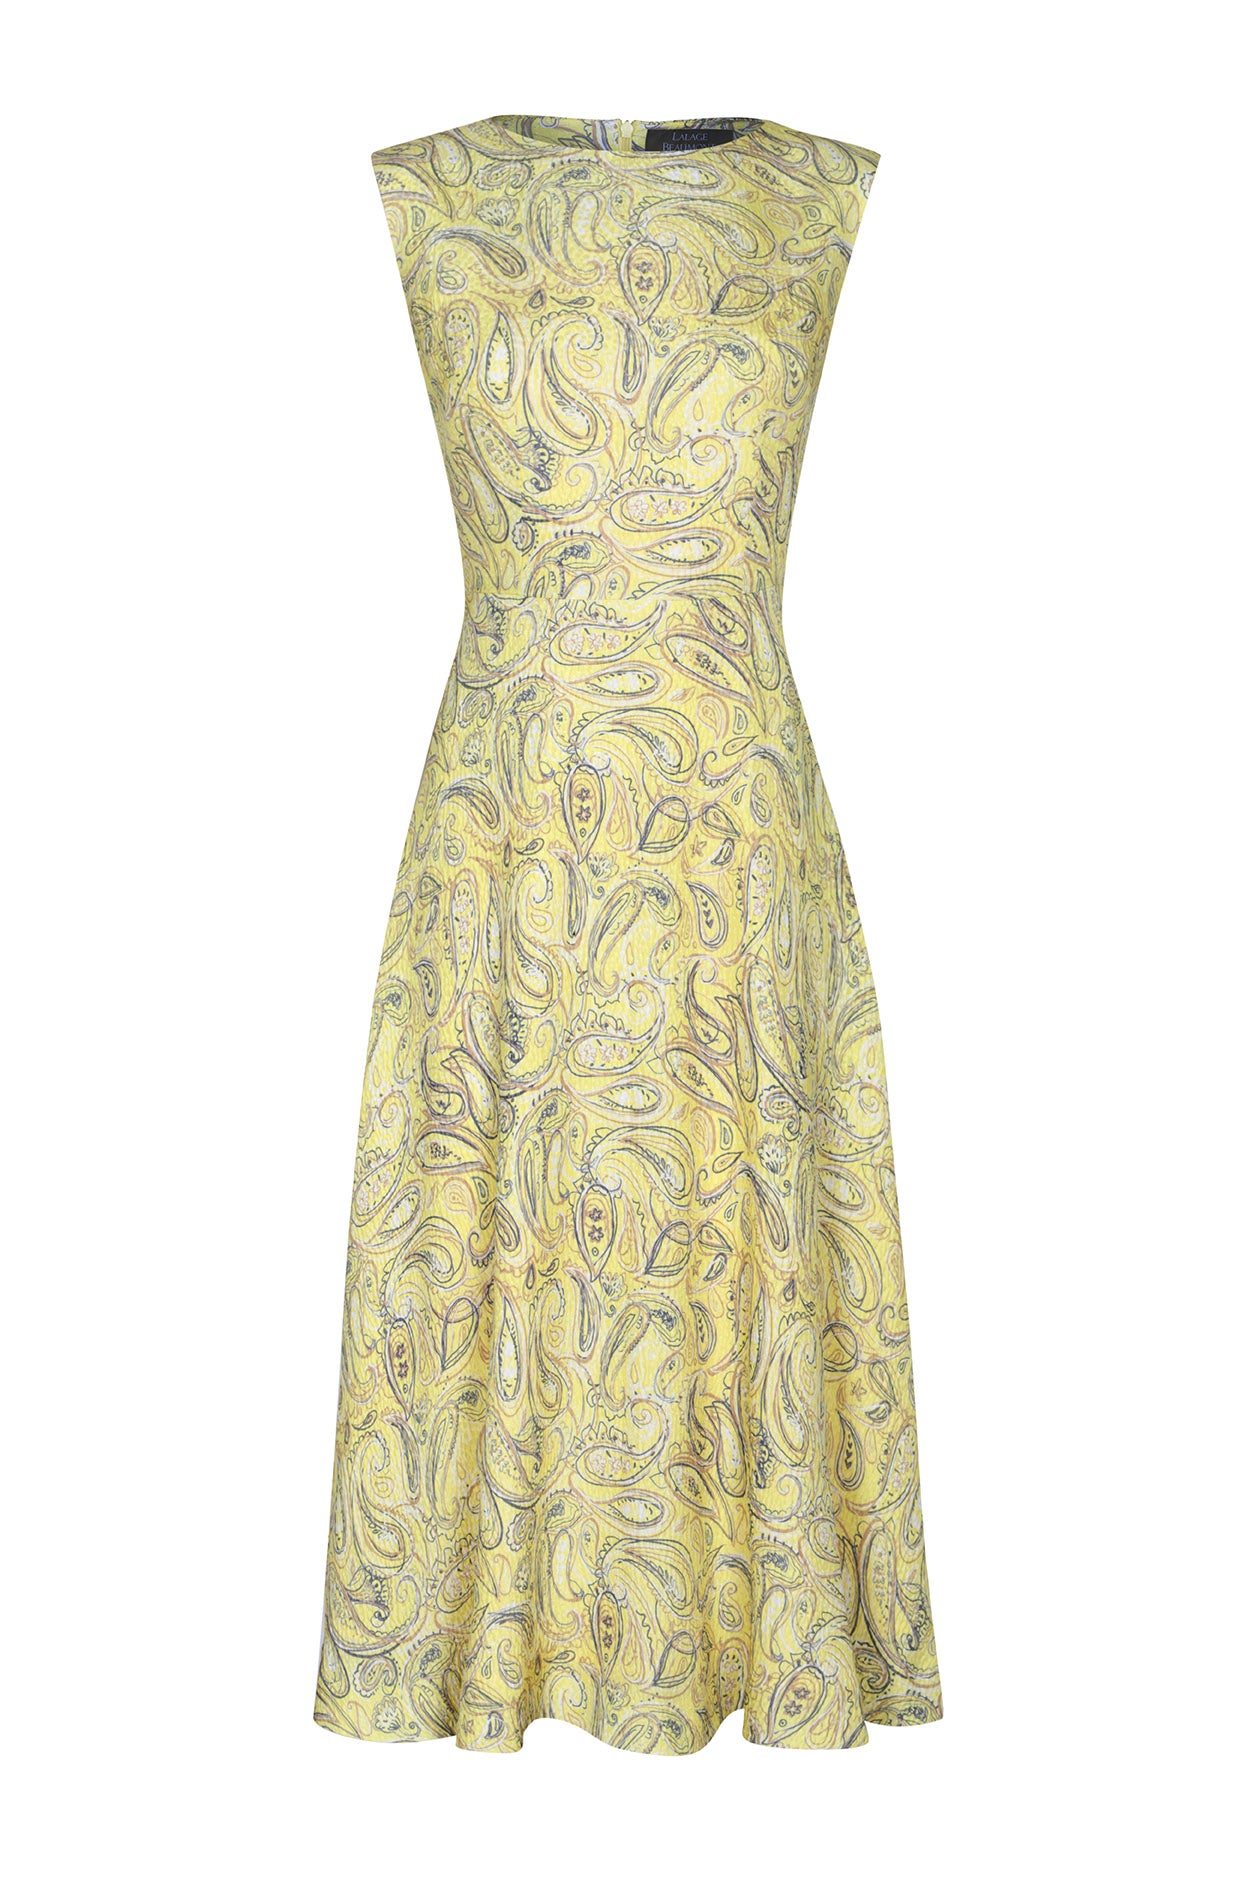 Sleeveless Midi Dress in Lemon Yellow Paisley Printed Silk Cloqué - Letty